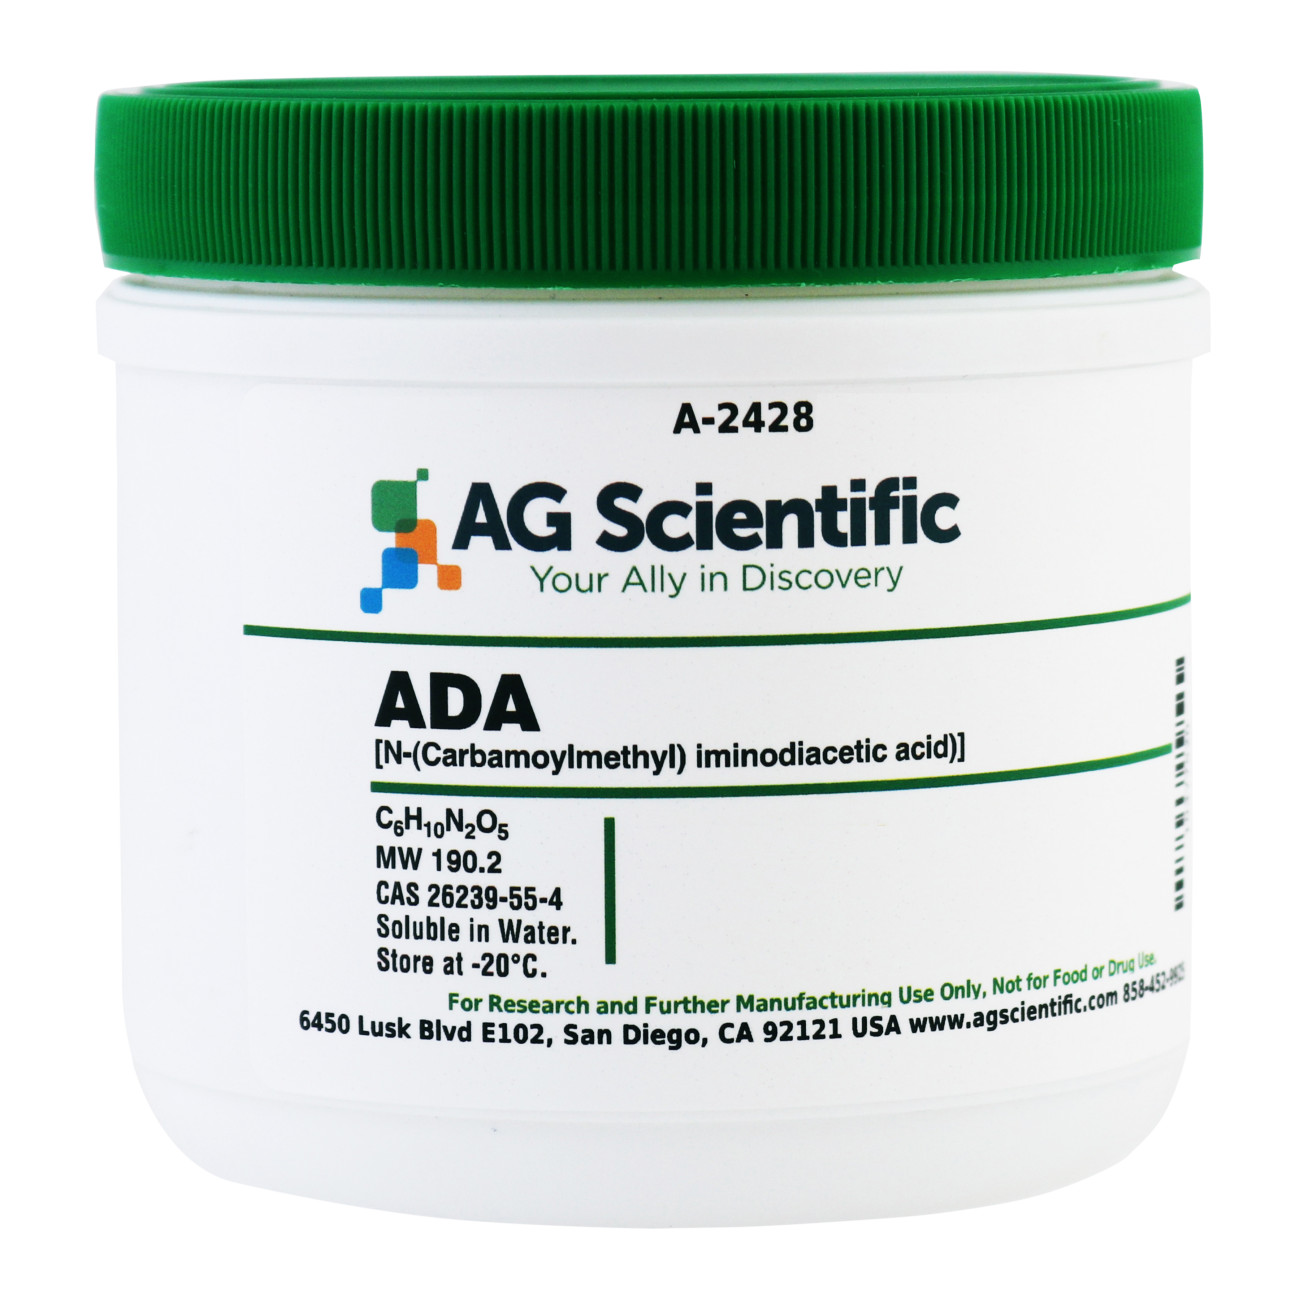 ADA [N-(Carbamoylmethyl) iminodiacetic acid], 25 G